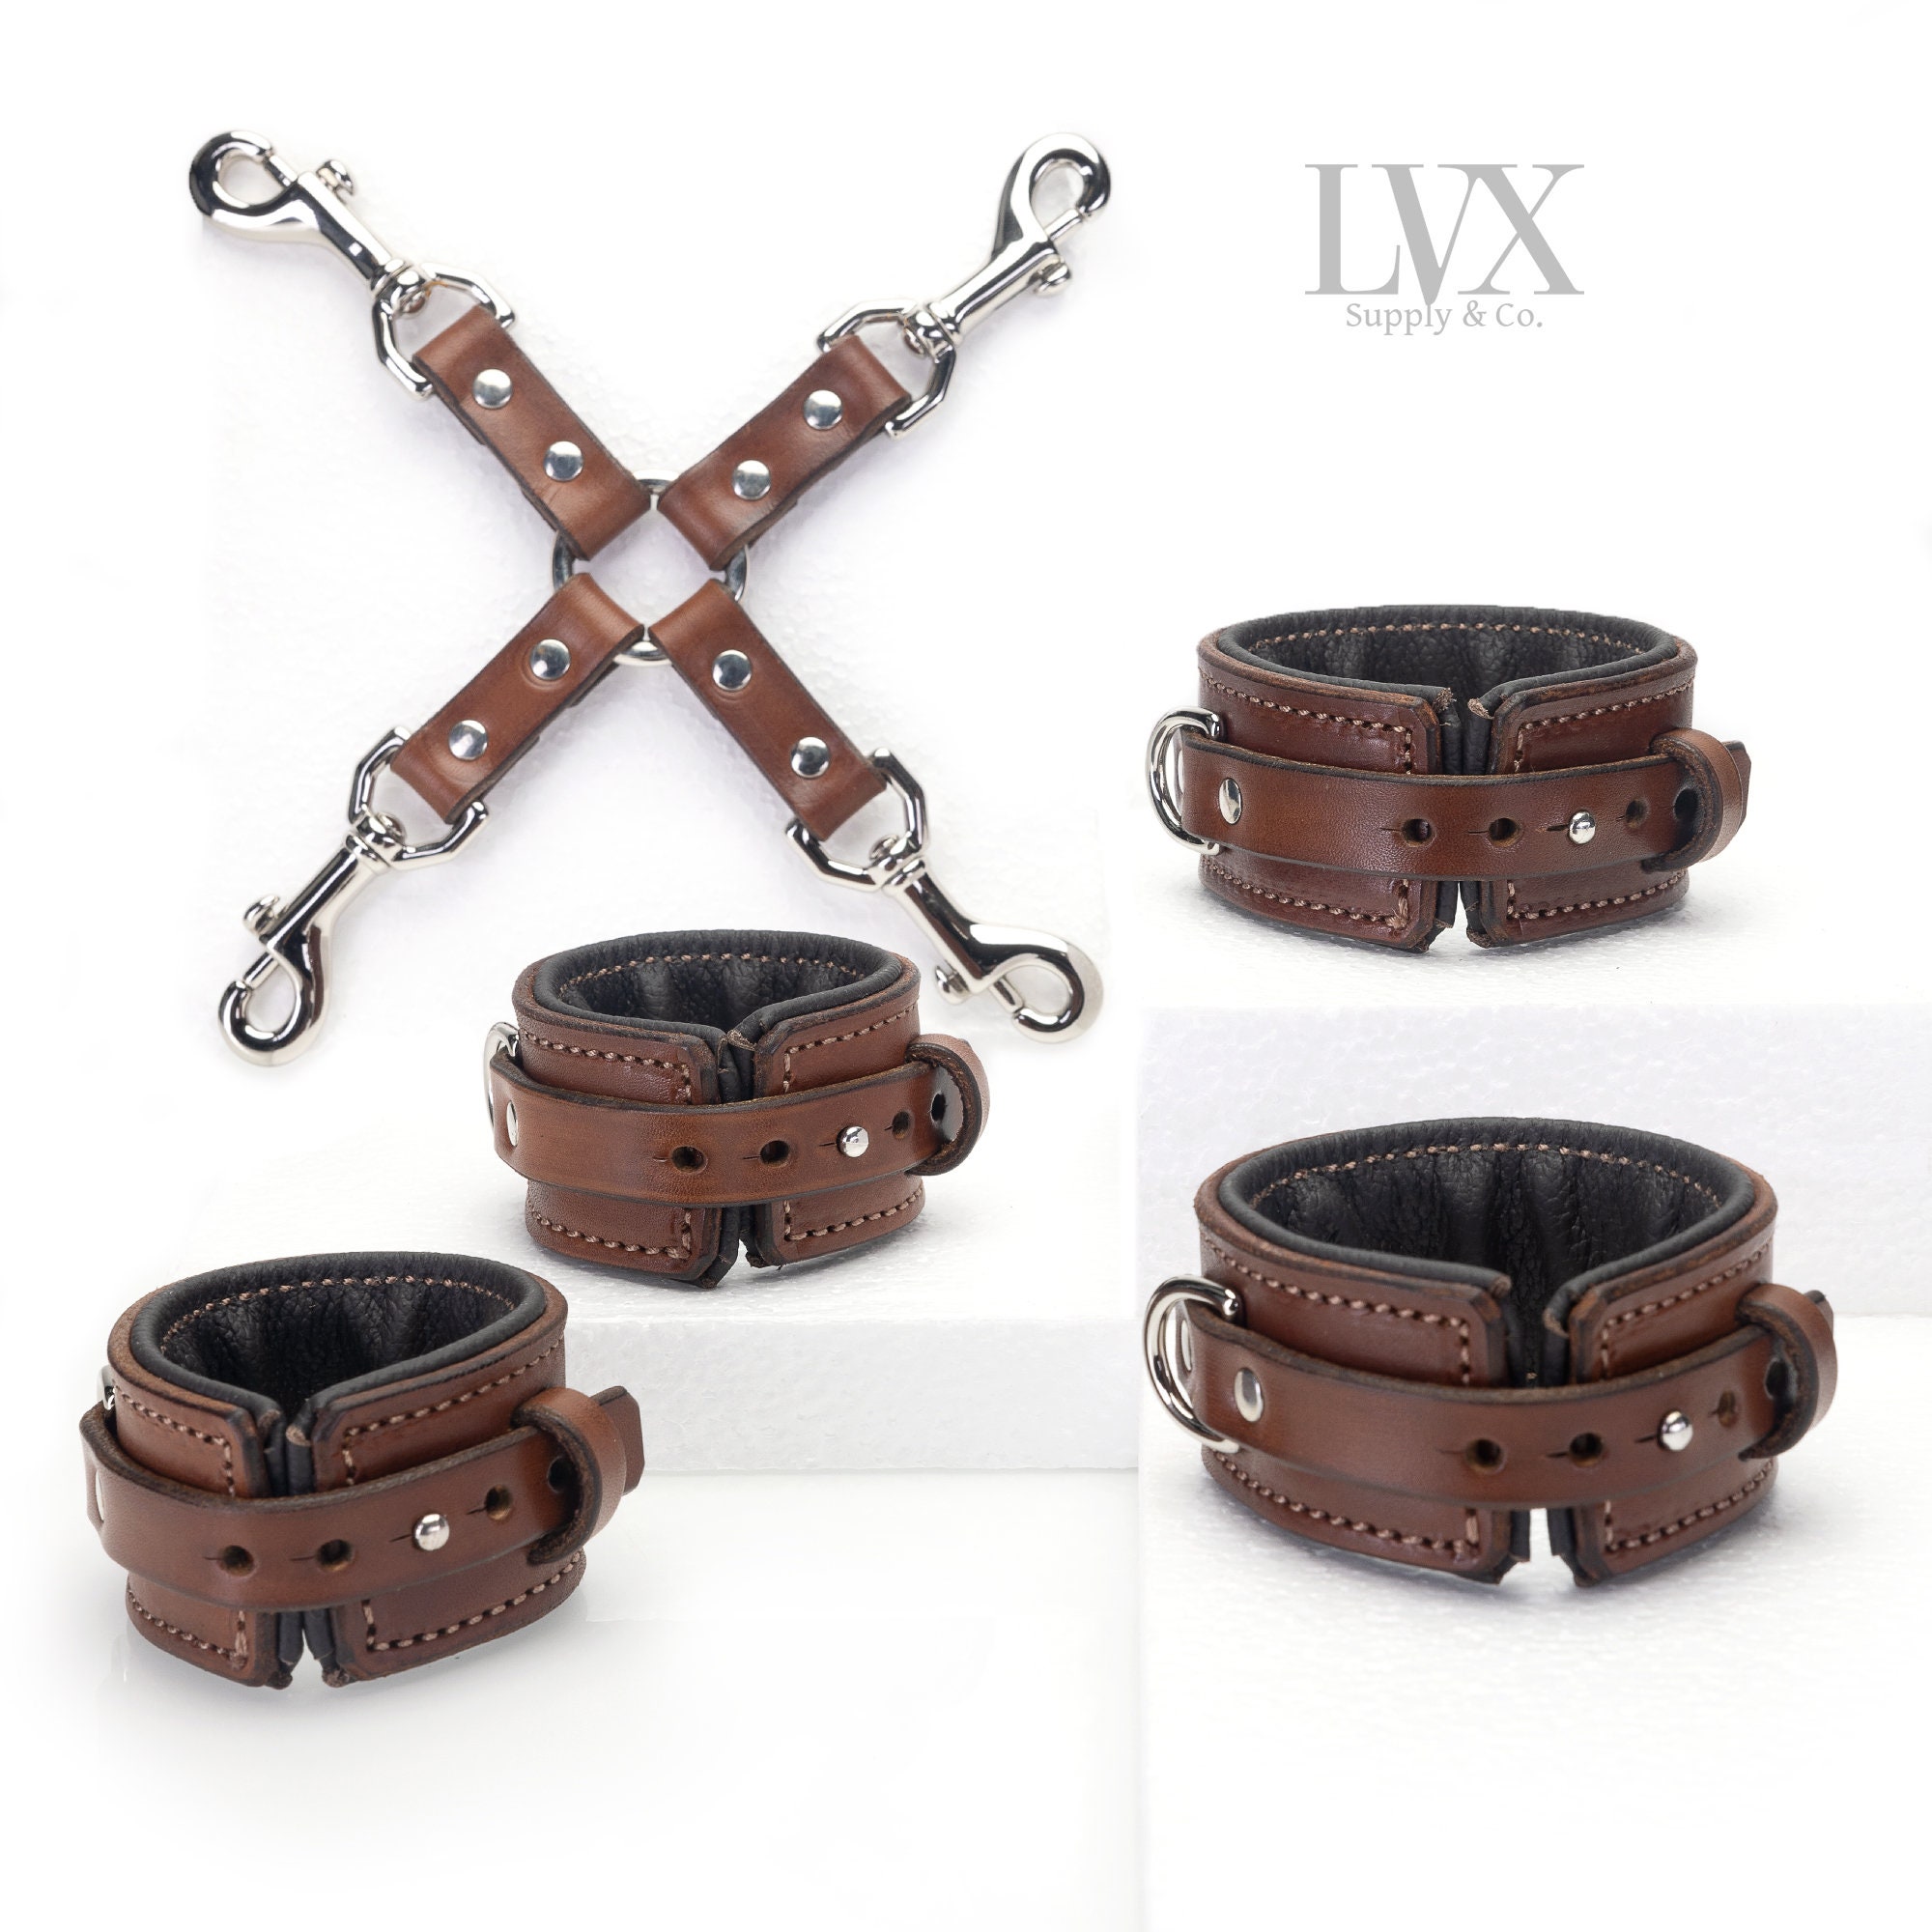 Slim Quick Release BDSM HogTie Set | Padded Leather Bondage BDSM Cuffs + Hog Tie | Submissive Restraints DDlg Slave | BDsM Toys | LVX Supply photo